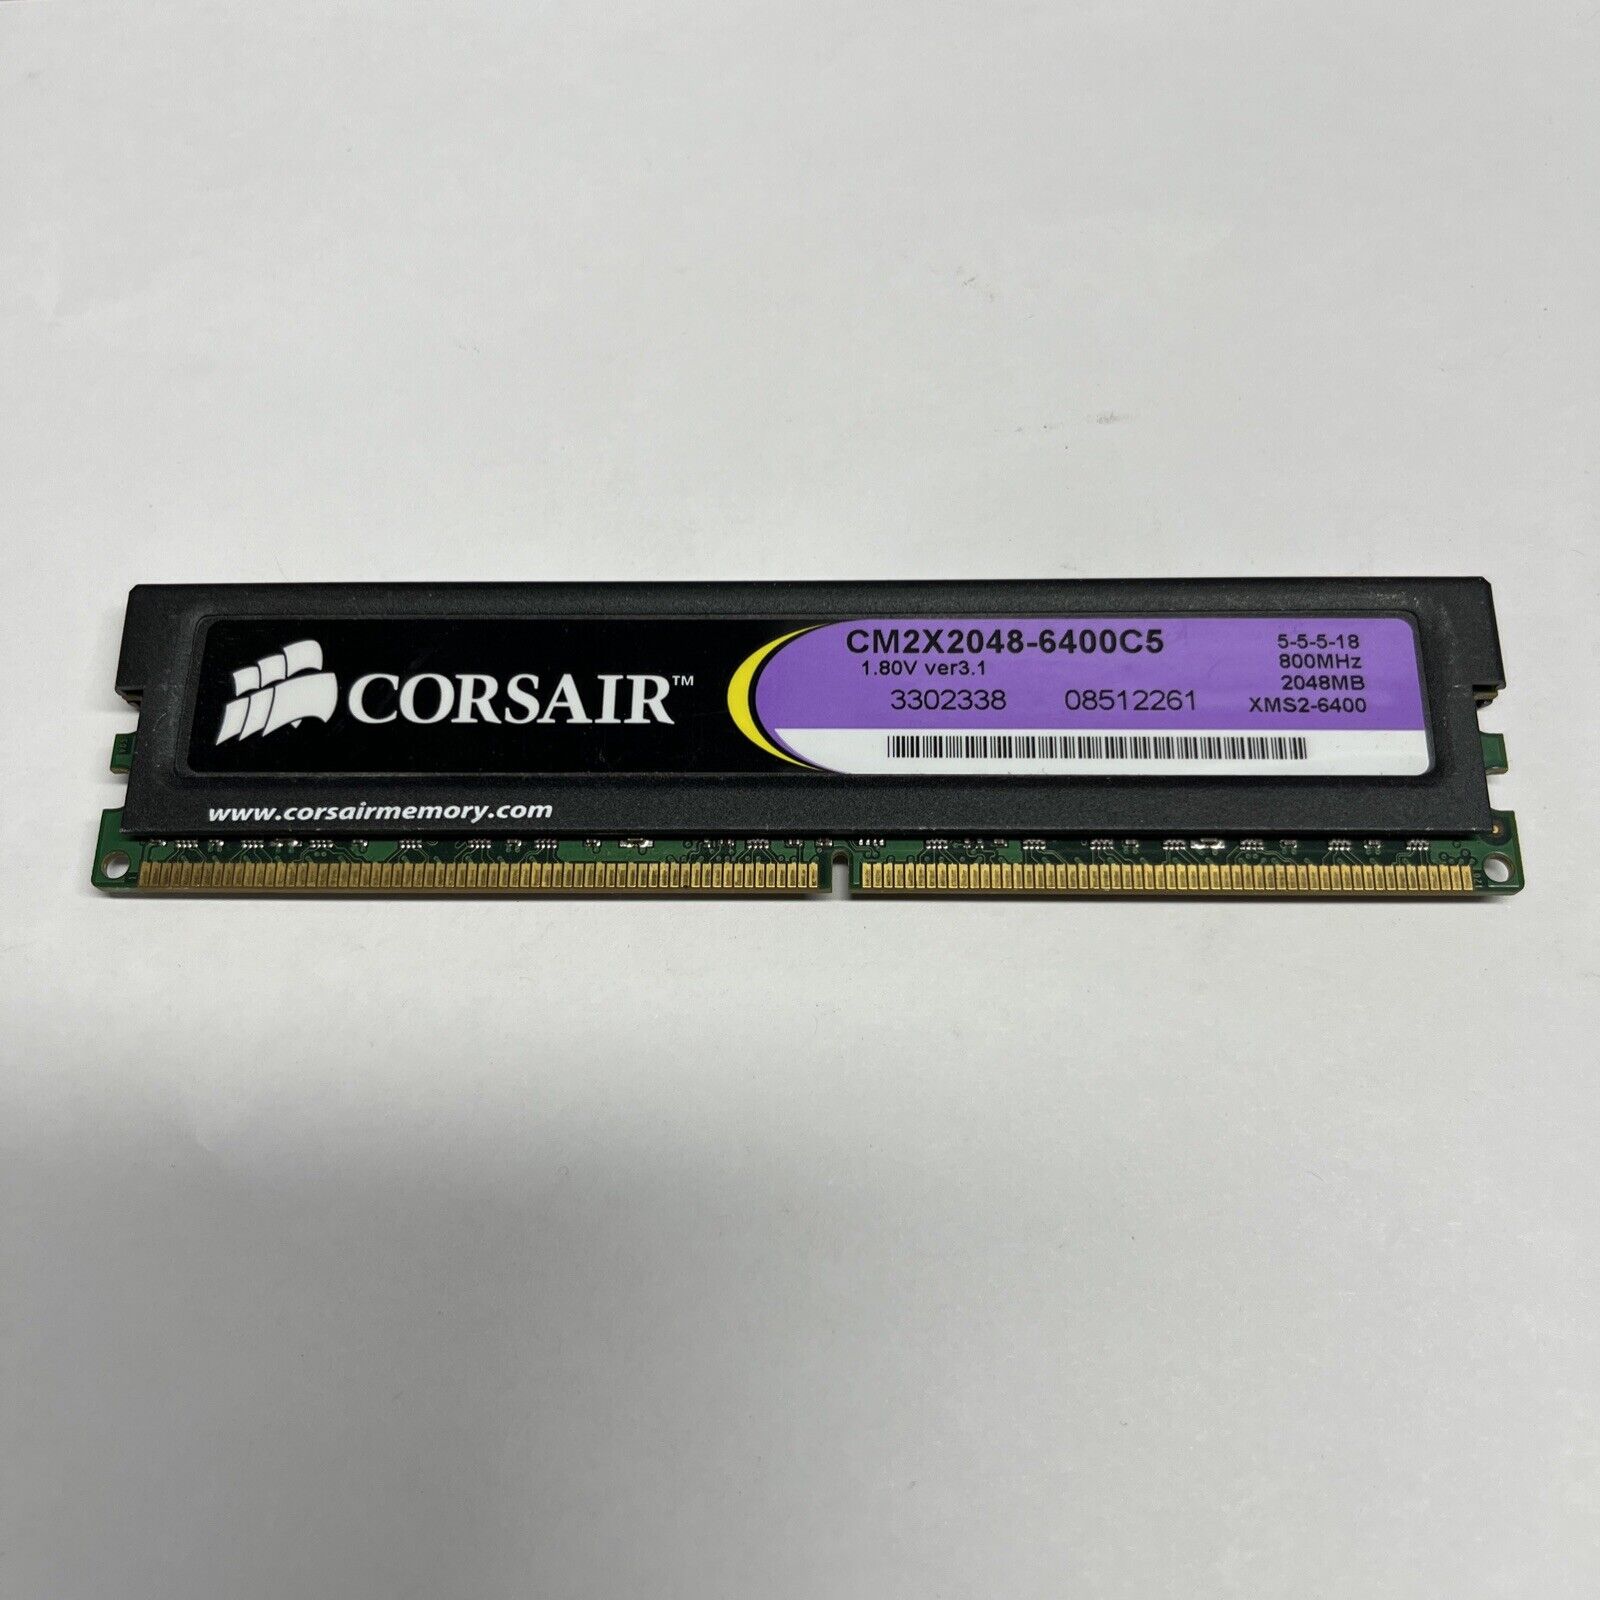 Corsair PC2-6400 2GB DIMM DDR2 Memory (CM2X2048-6400C5C)